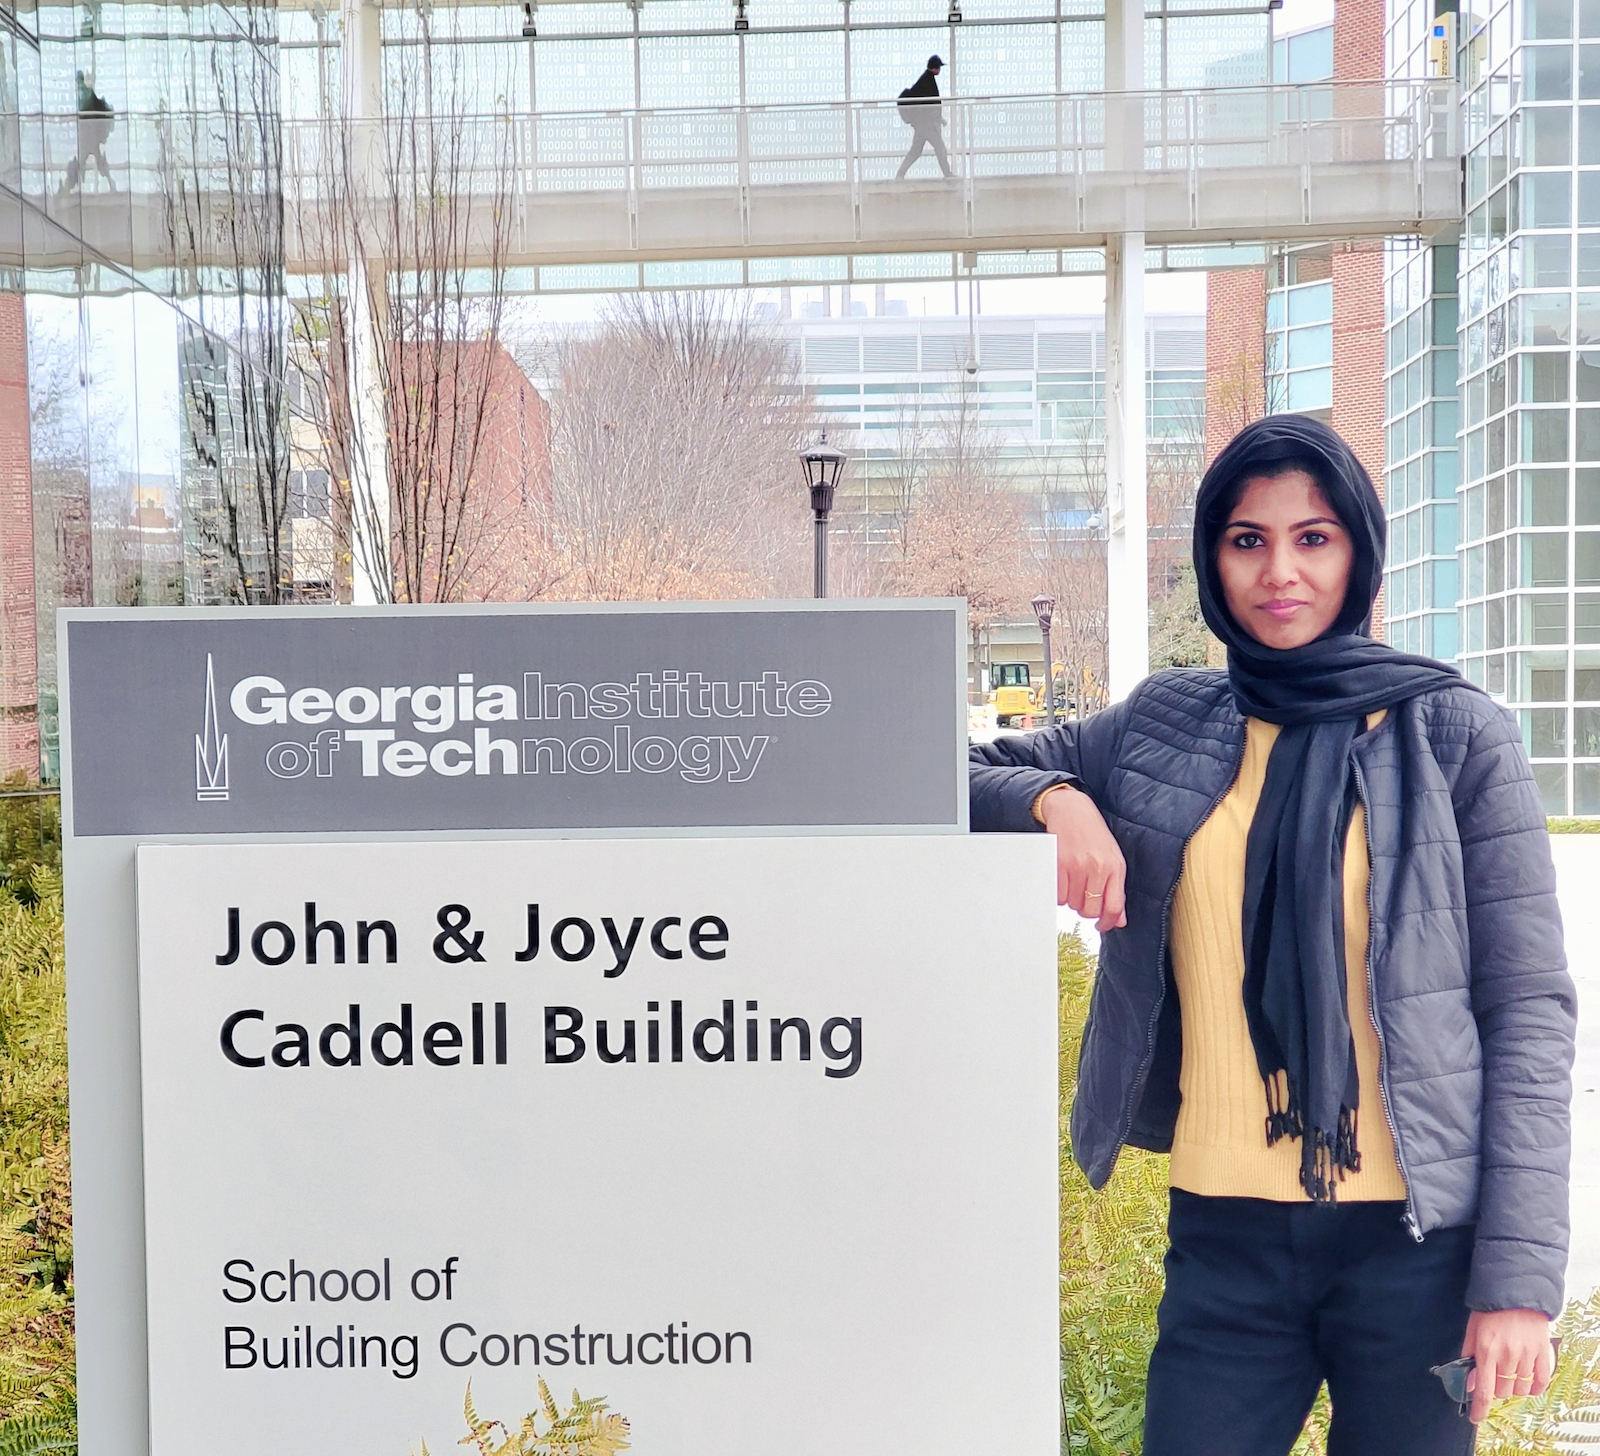 Fathima Lahar encourages more women to go into construction.